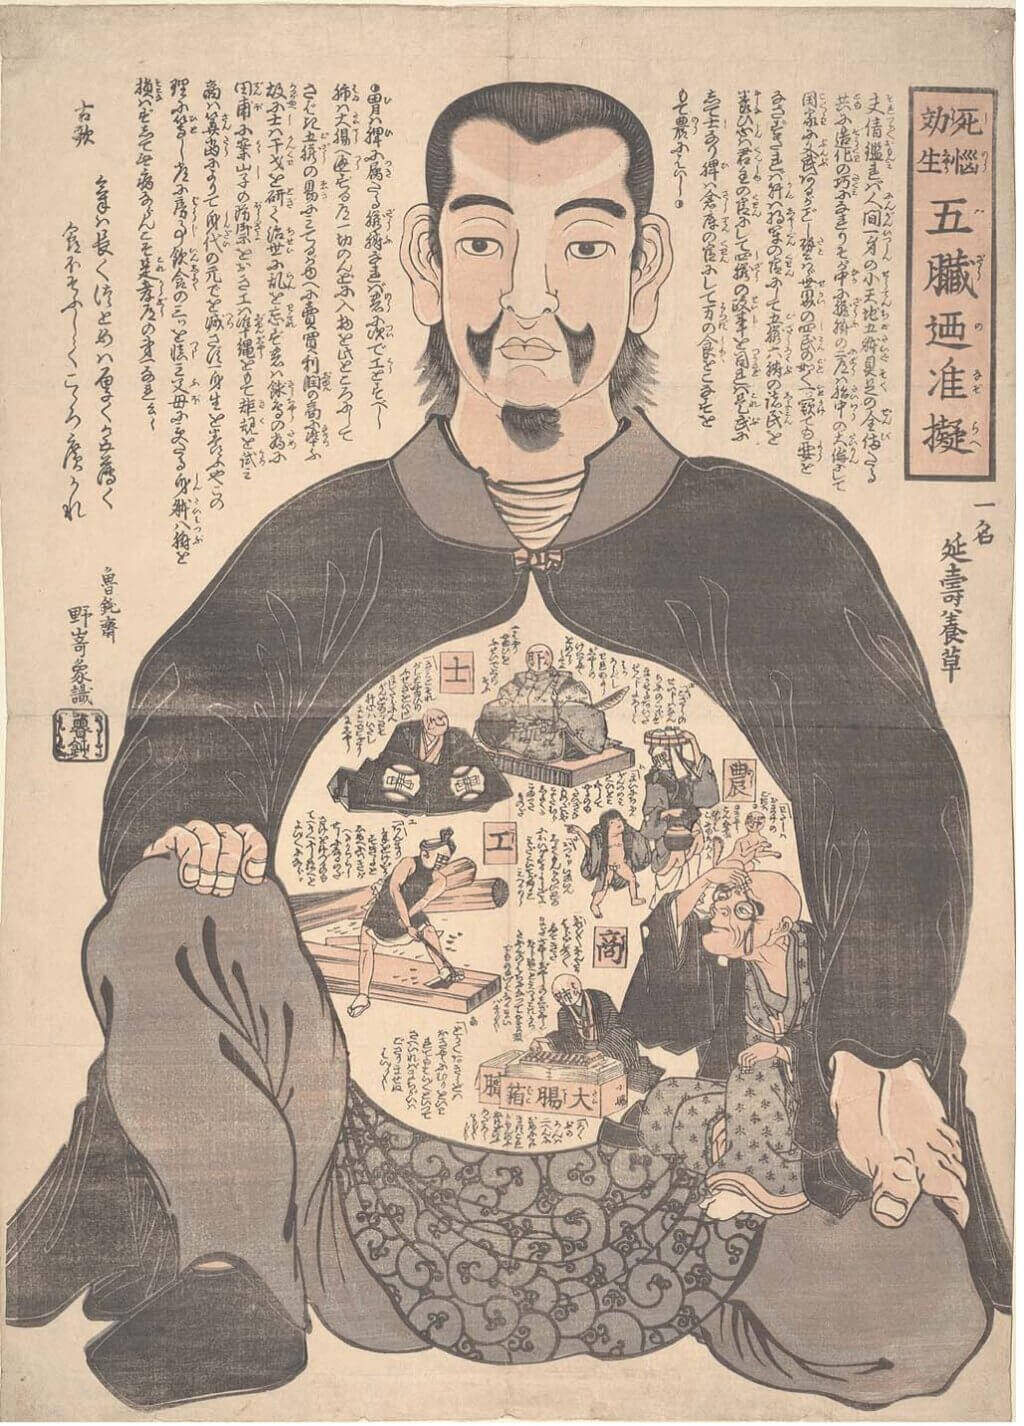 Shinō kōshō gozō no nazorae illustrated Nozoki Shōshiki Rodonsai (19th century) from the UCSF Library Japanese Woodblock Print Collection.